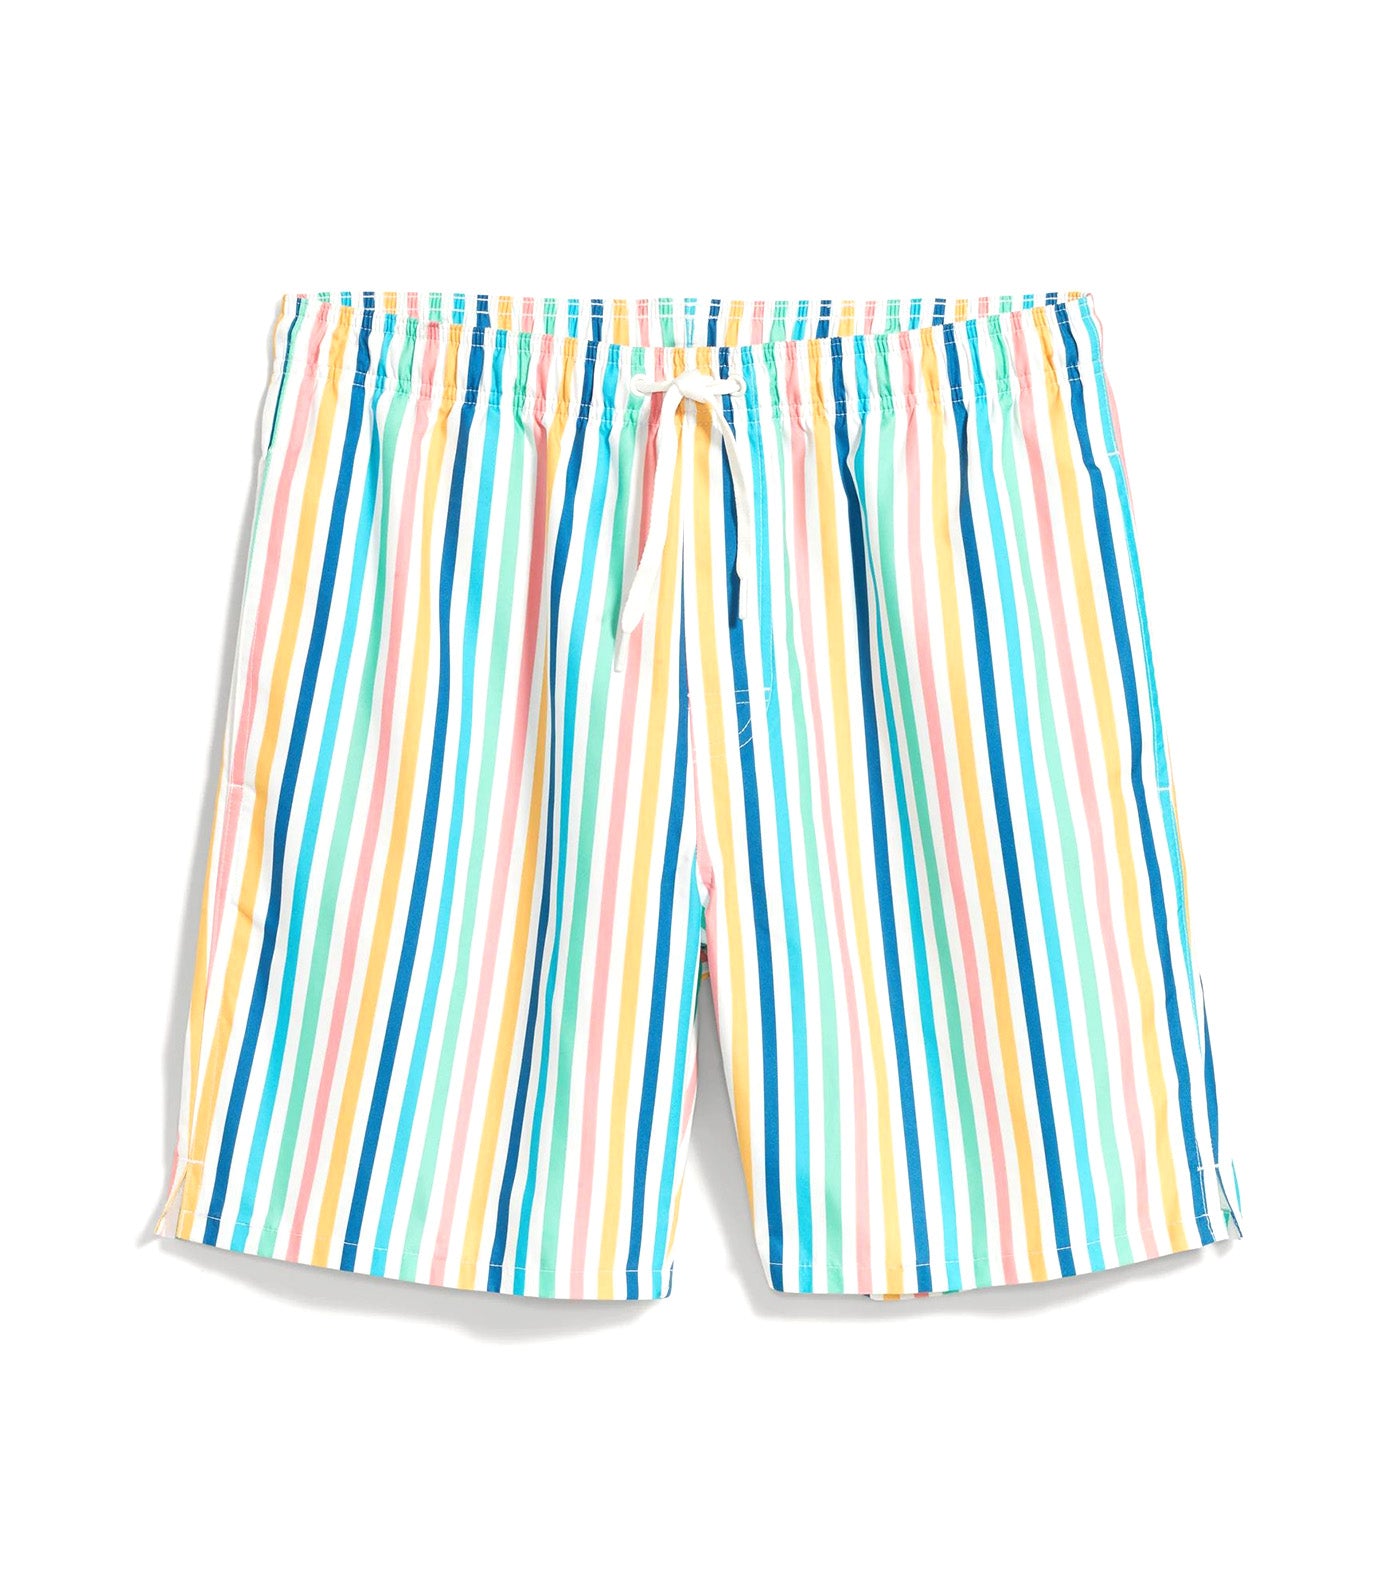 Printed Swim Trunks for Men - 7-Inch Inseam Multi Stripe